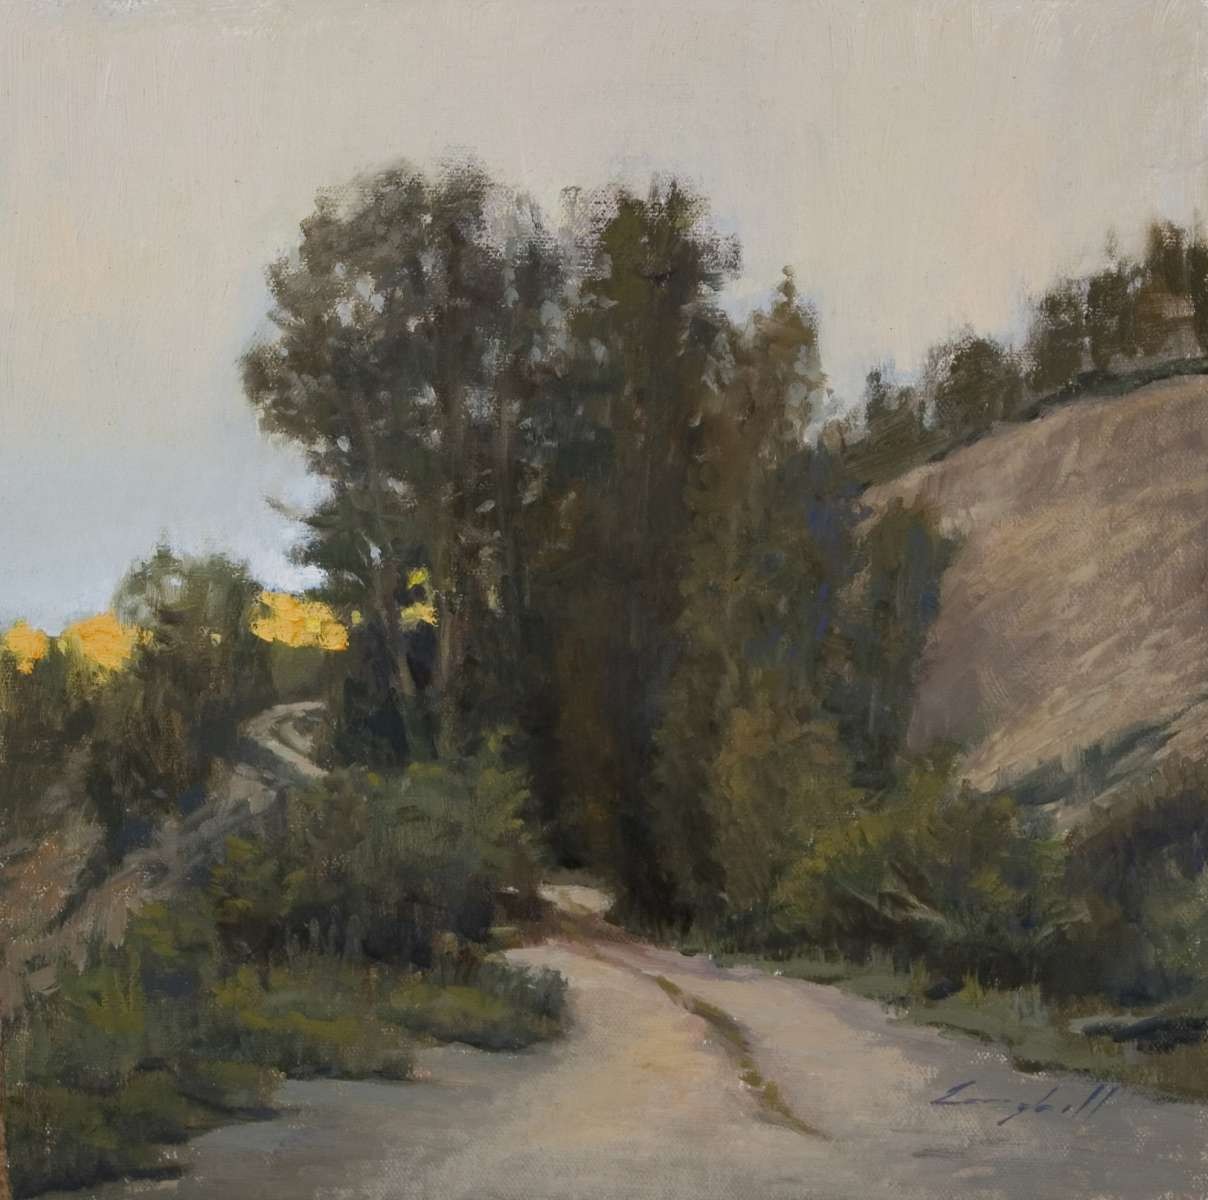 Lime Creek Road by artist Peter Campbel